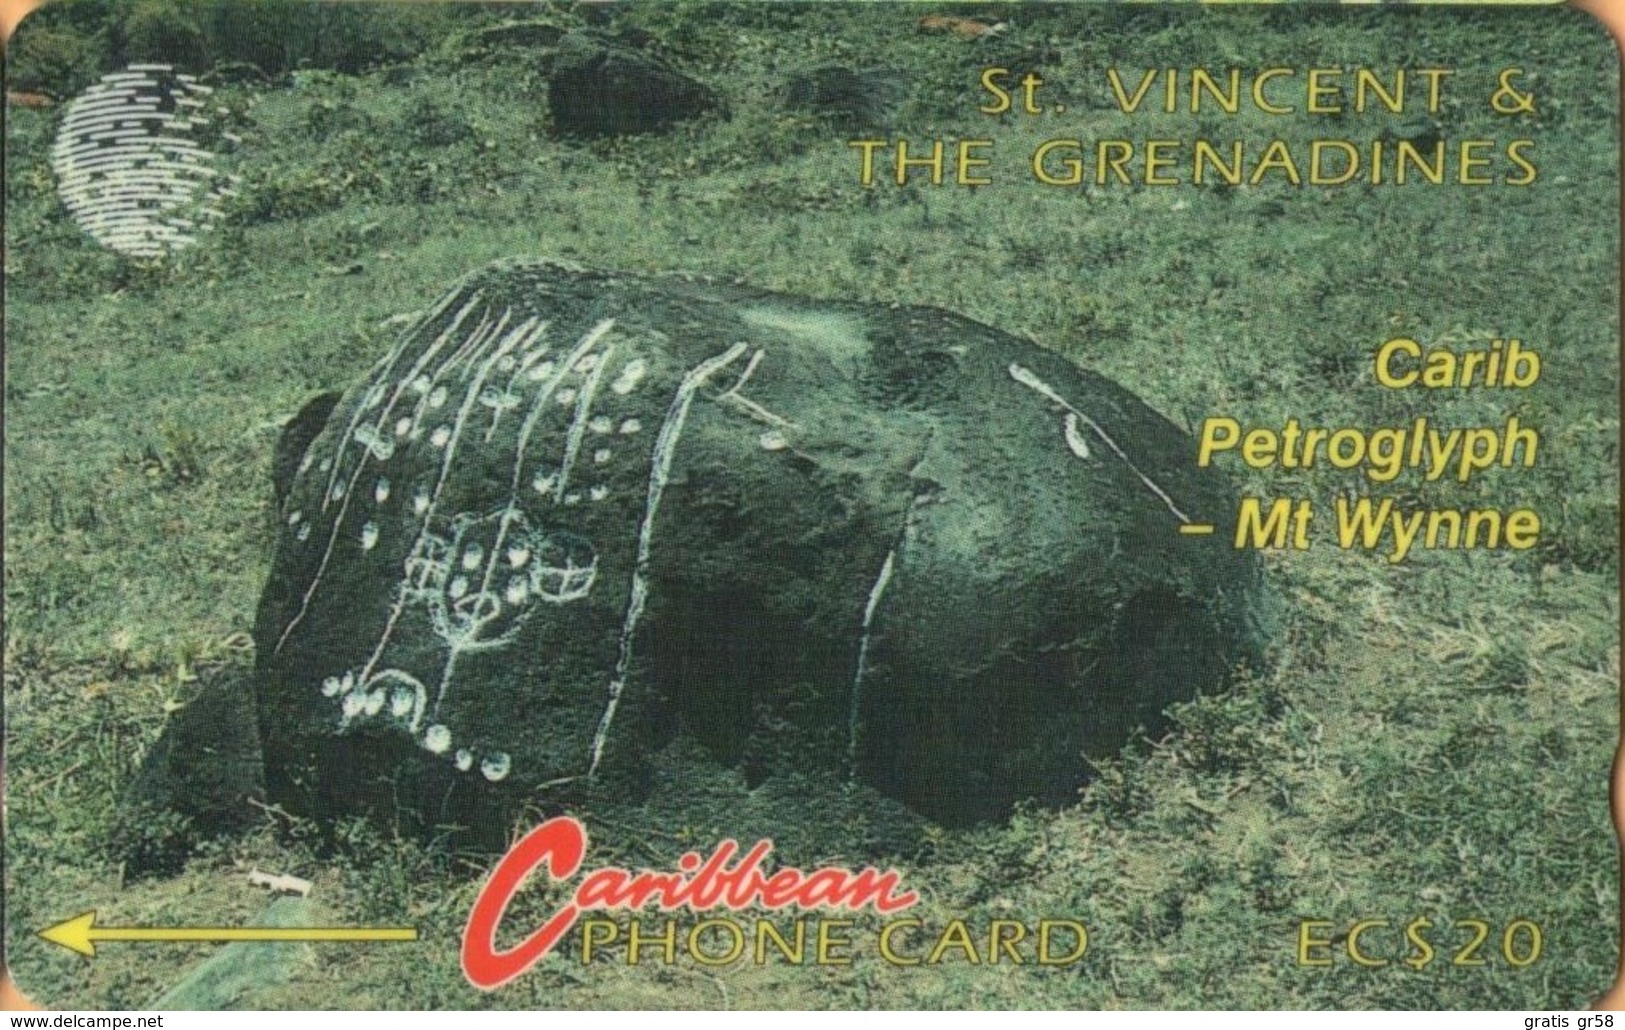 St. Vincent & The Grenadines - STV-5B, GPT, 5CSVB, Carib Petroglyph, 20 EC$, 22.000ex, 1992, Used - St. Vincent & The Grenadines